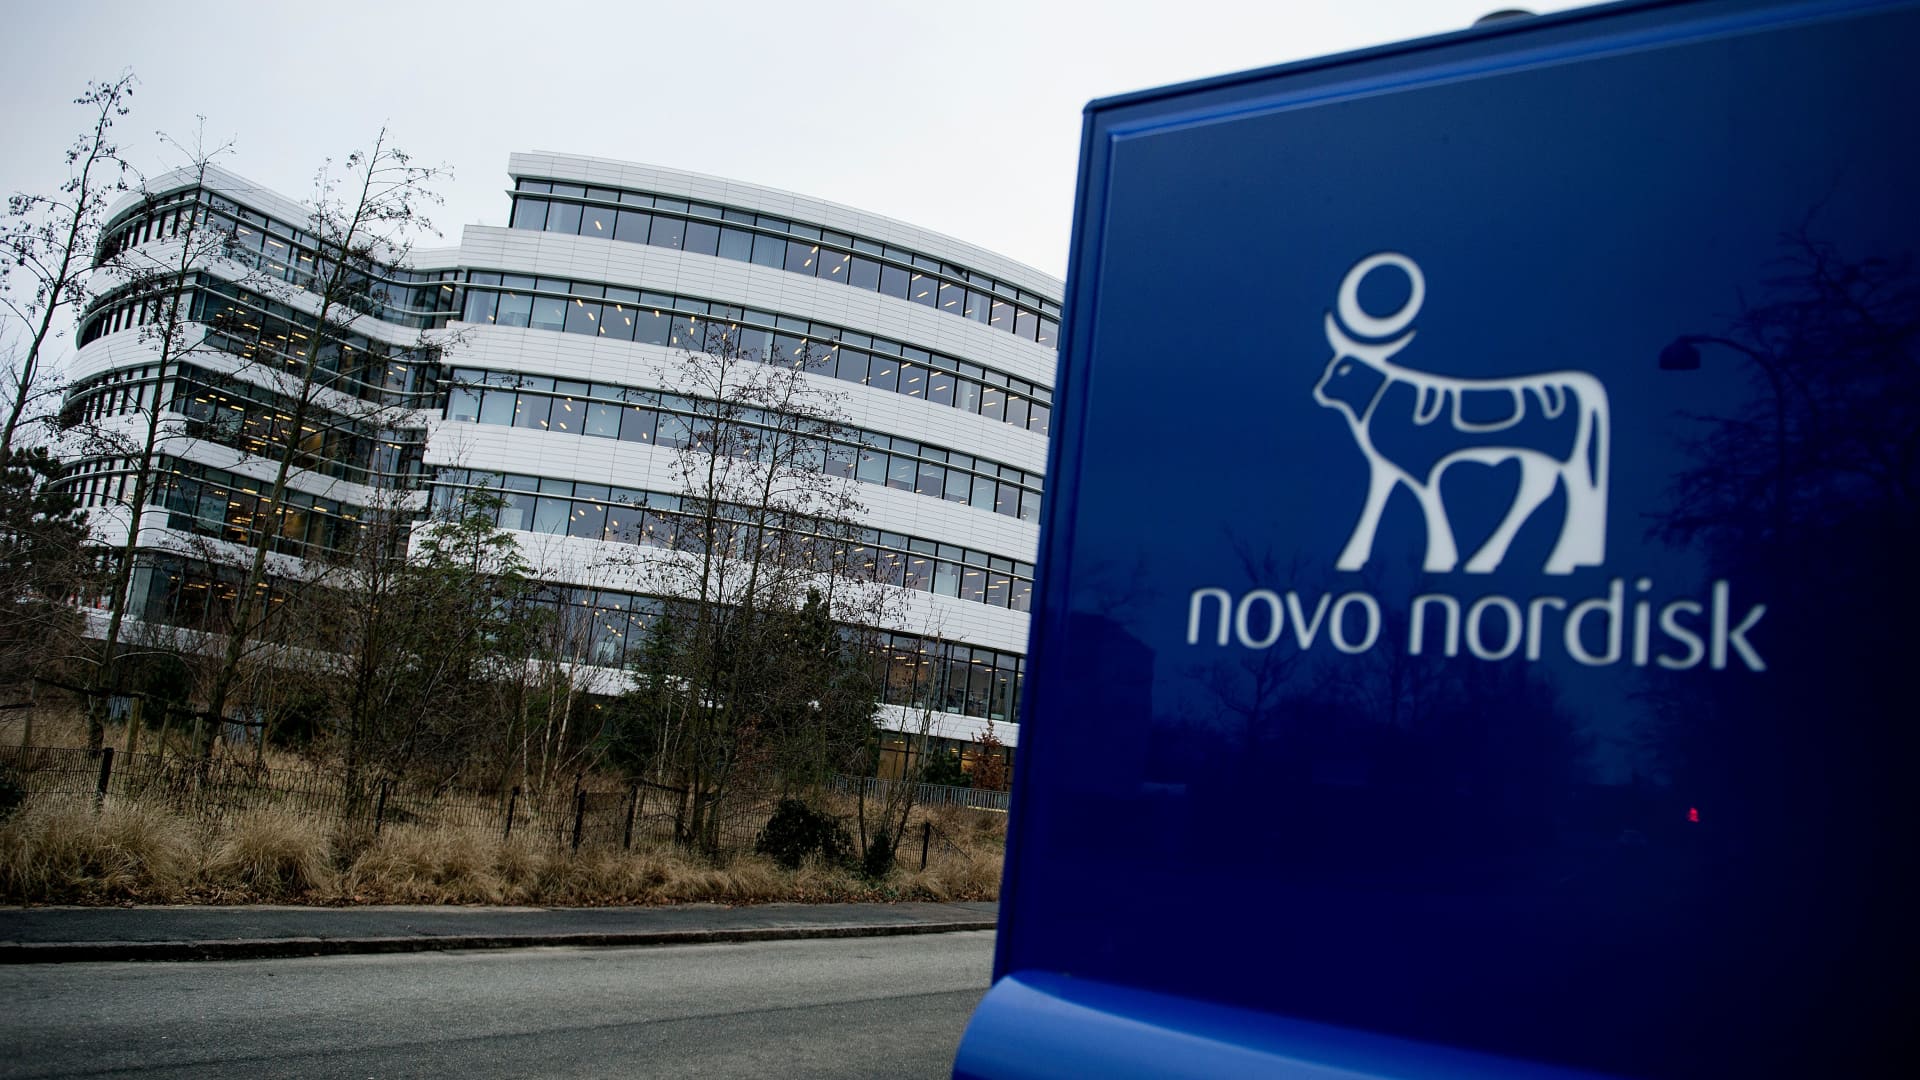 Novo Nordisk to acquire obesity drug maker Inversago Pharma for up to $1 billion